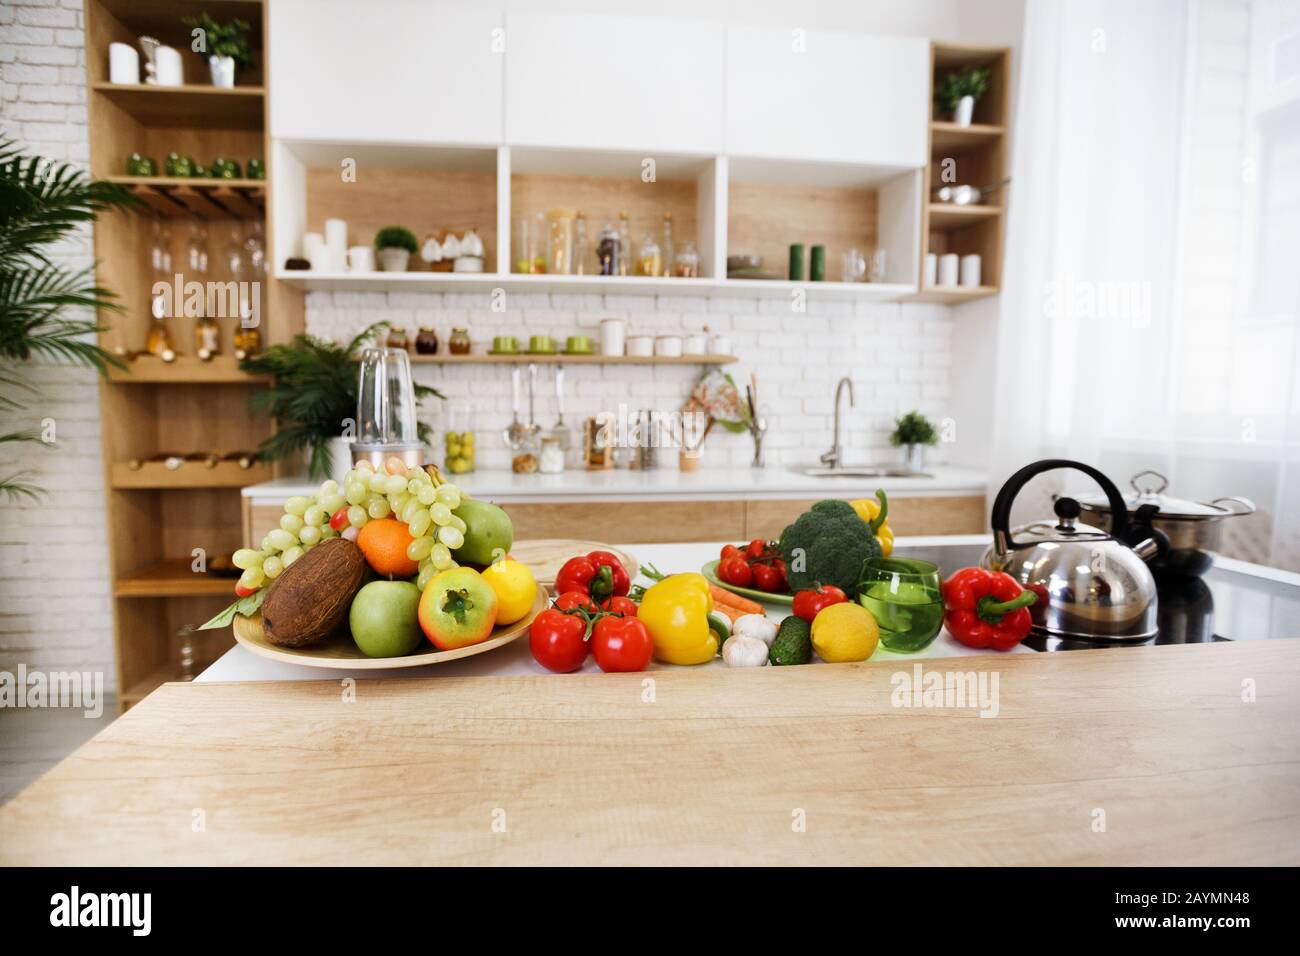 https://c8.alamy.com/comp/2AYMN48/kitchen-interior-fresh-fruits-and-vegetables-on-table-2AYMN48.jpg